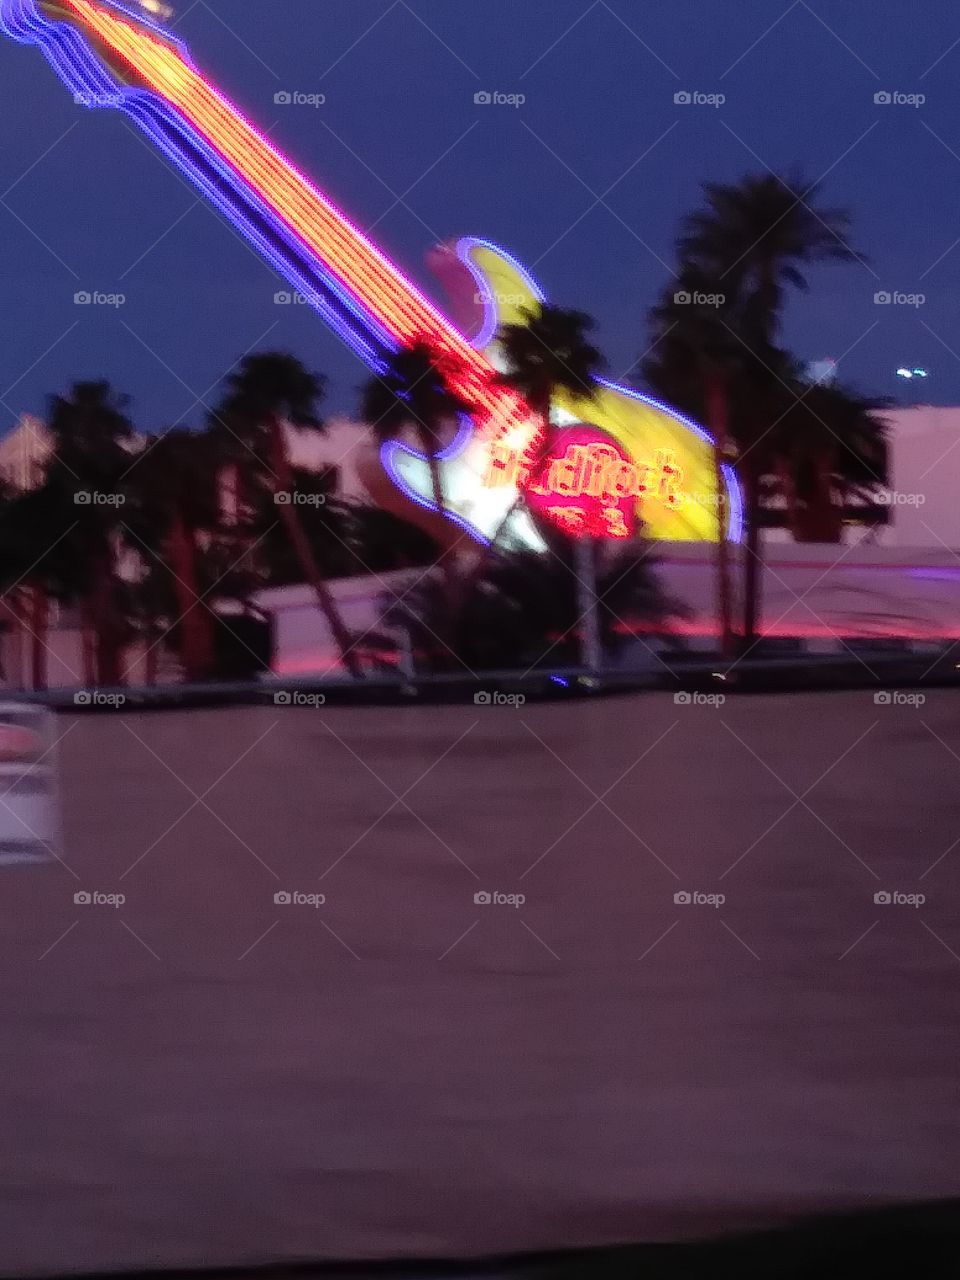 hard rock casino Las Vegas